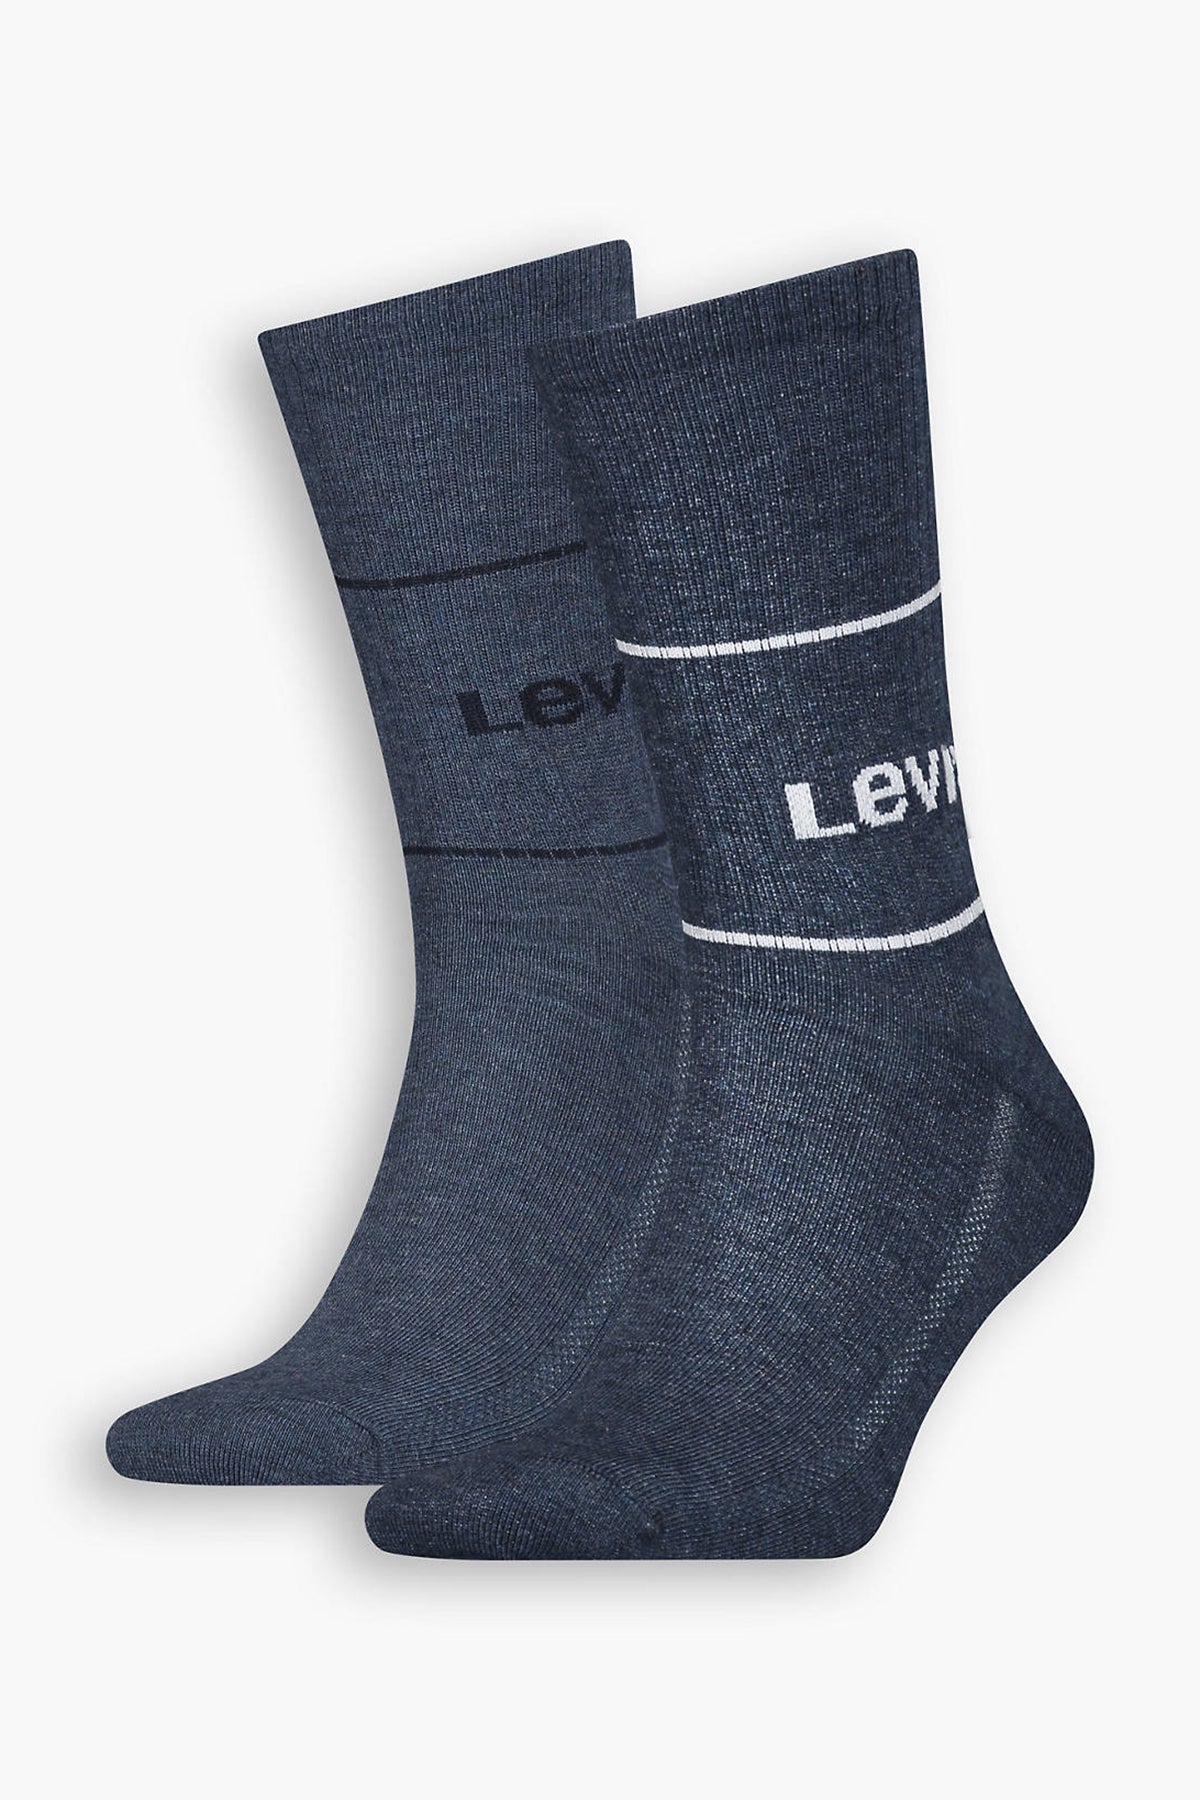 Levi's Organik Pamuklu 2 Pack Uzun Erkek Çorap 37157-0758 İNDİGO